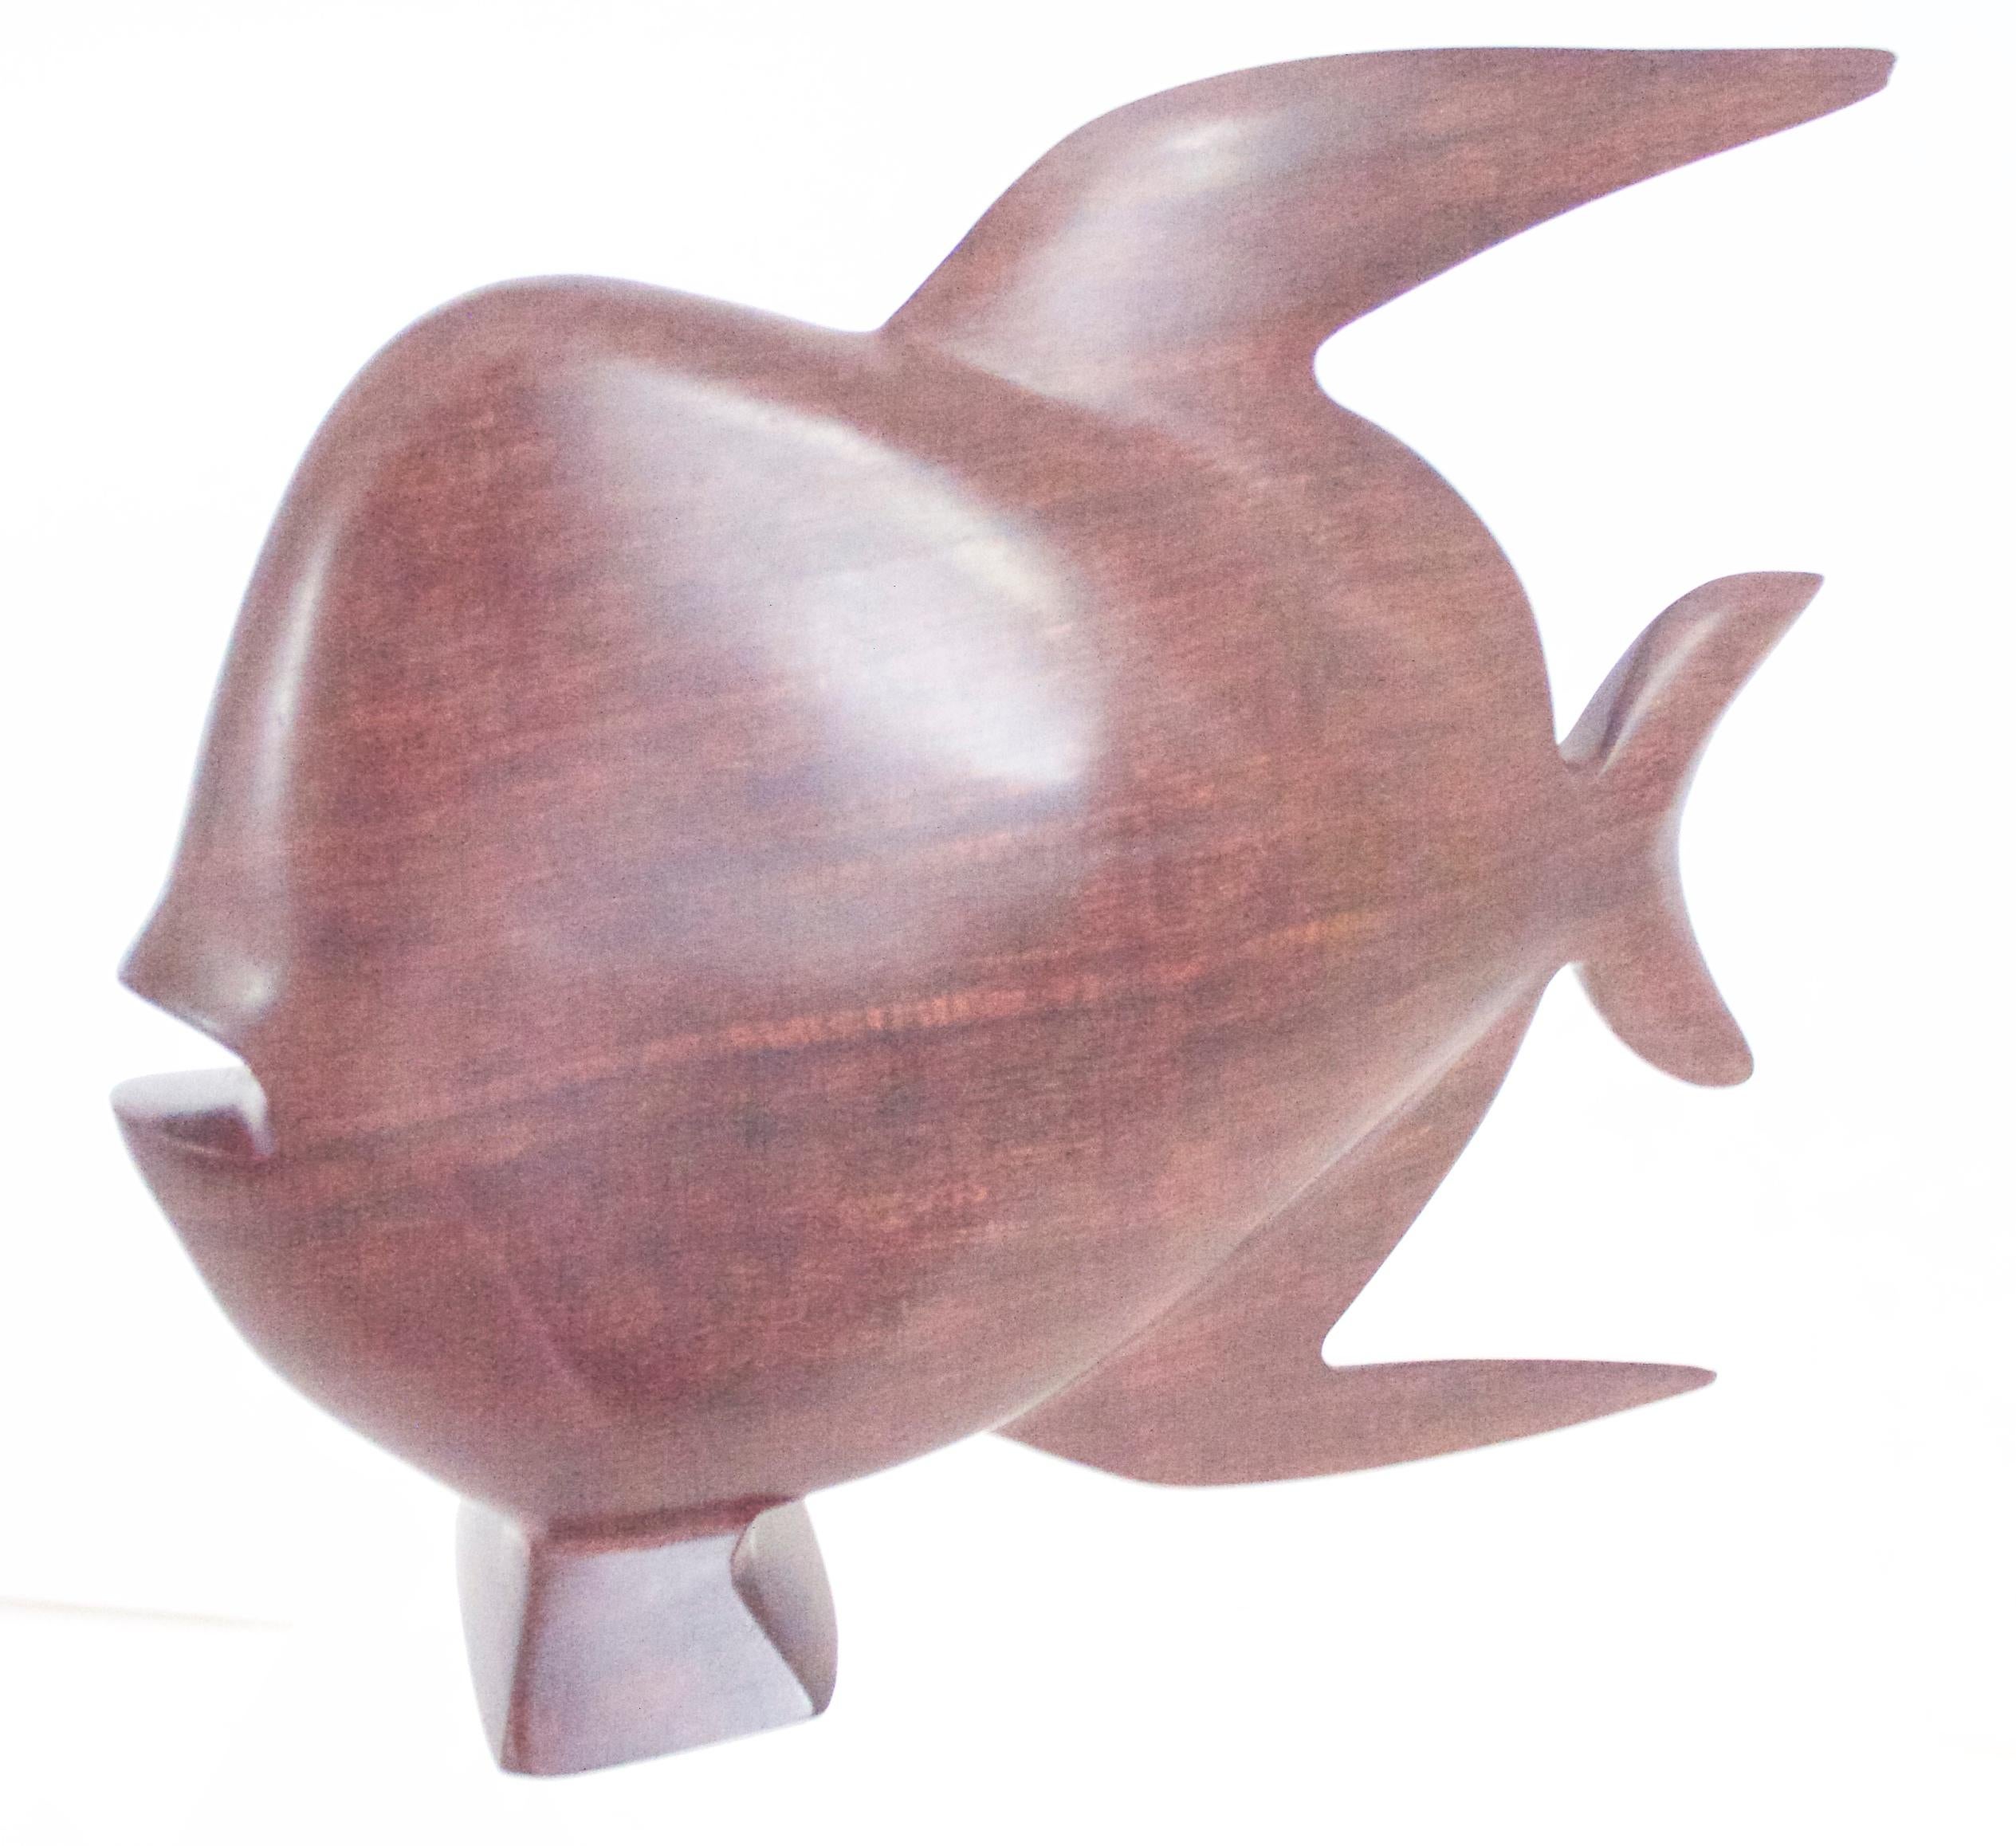 1960s Scandinavian Modern ironwood/rosewood sculpture of a fish, late 1950s

Measures: Height 17 cms, length 23 cms, weight 0.742 kgs.